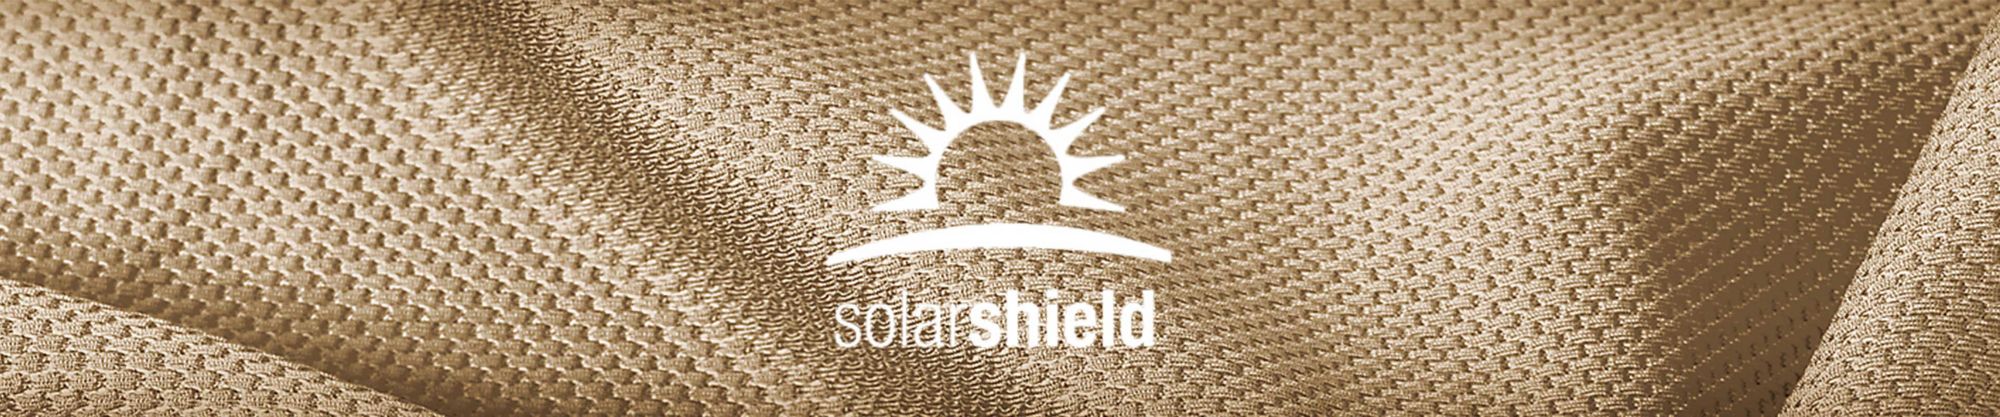 Solar Shield logo